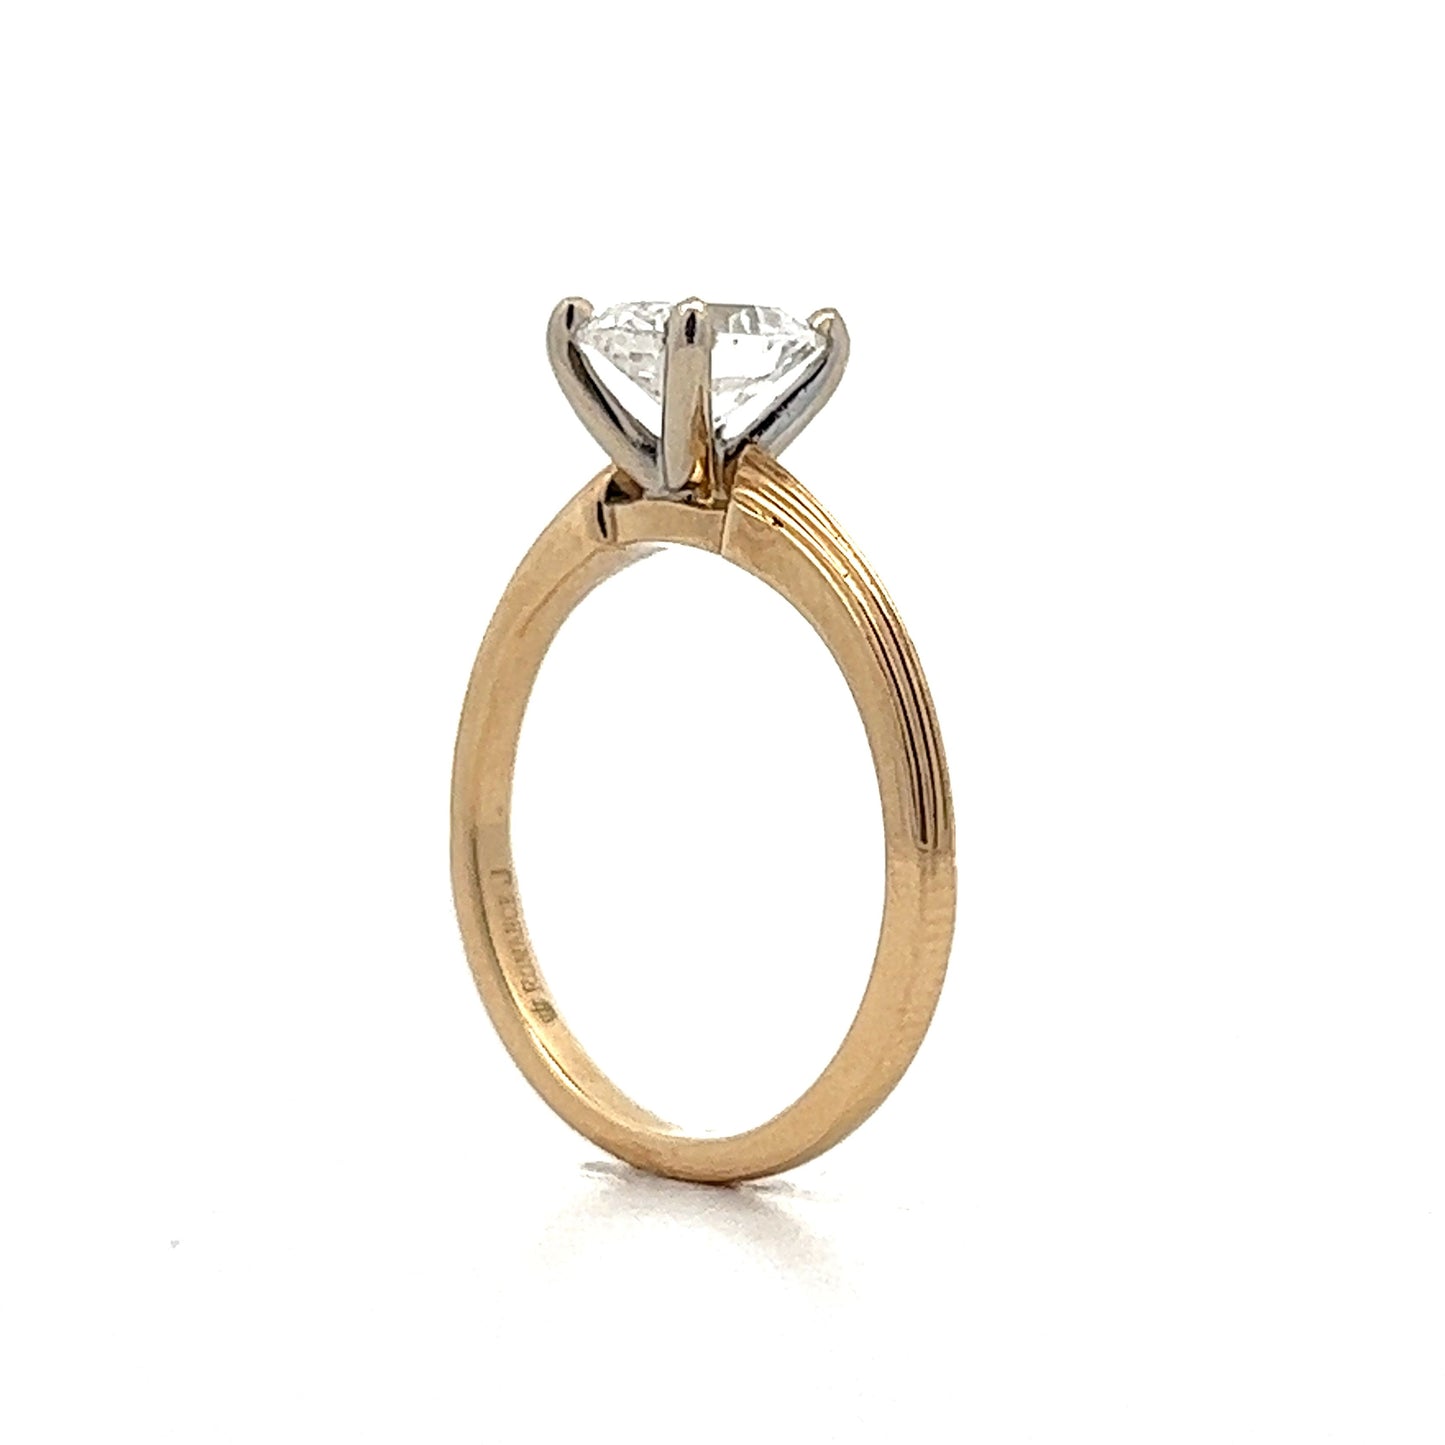 1.01 Cushion Cut Diamond Engagement Ring in 14k Yellow Gold